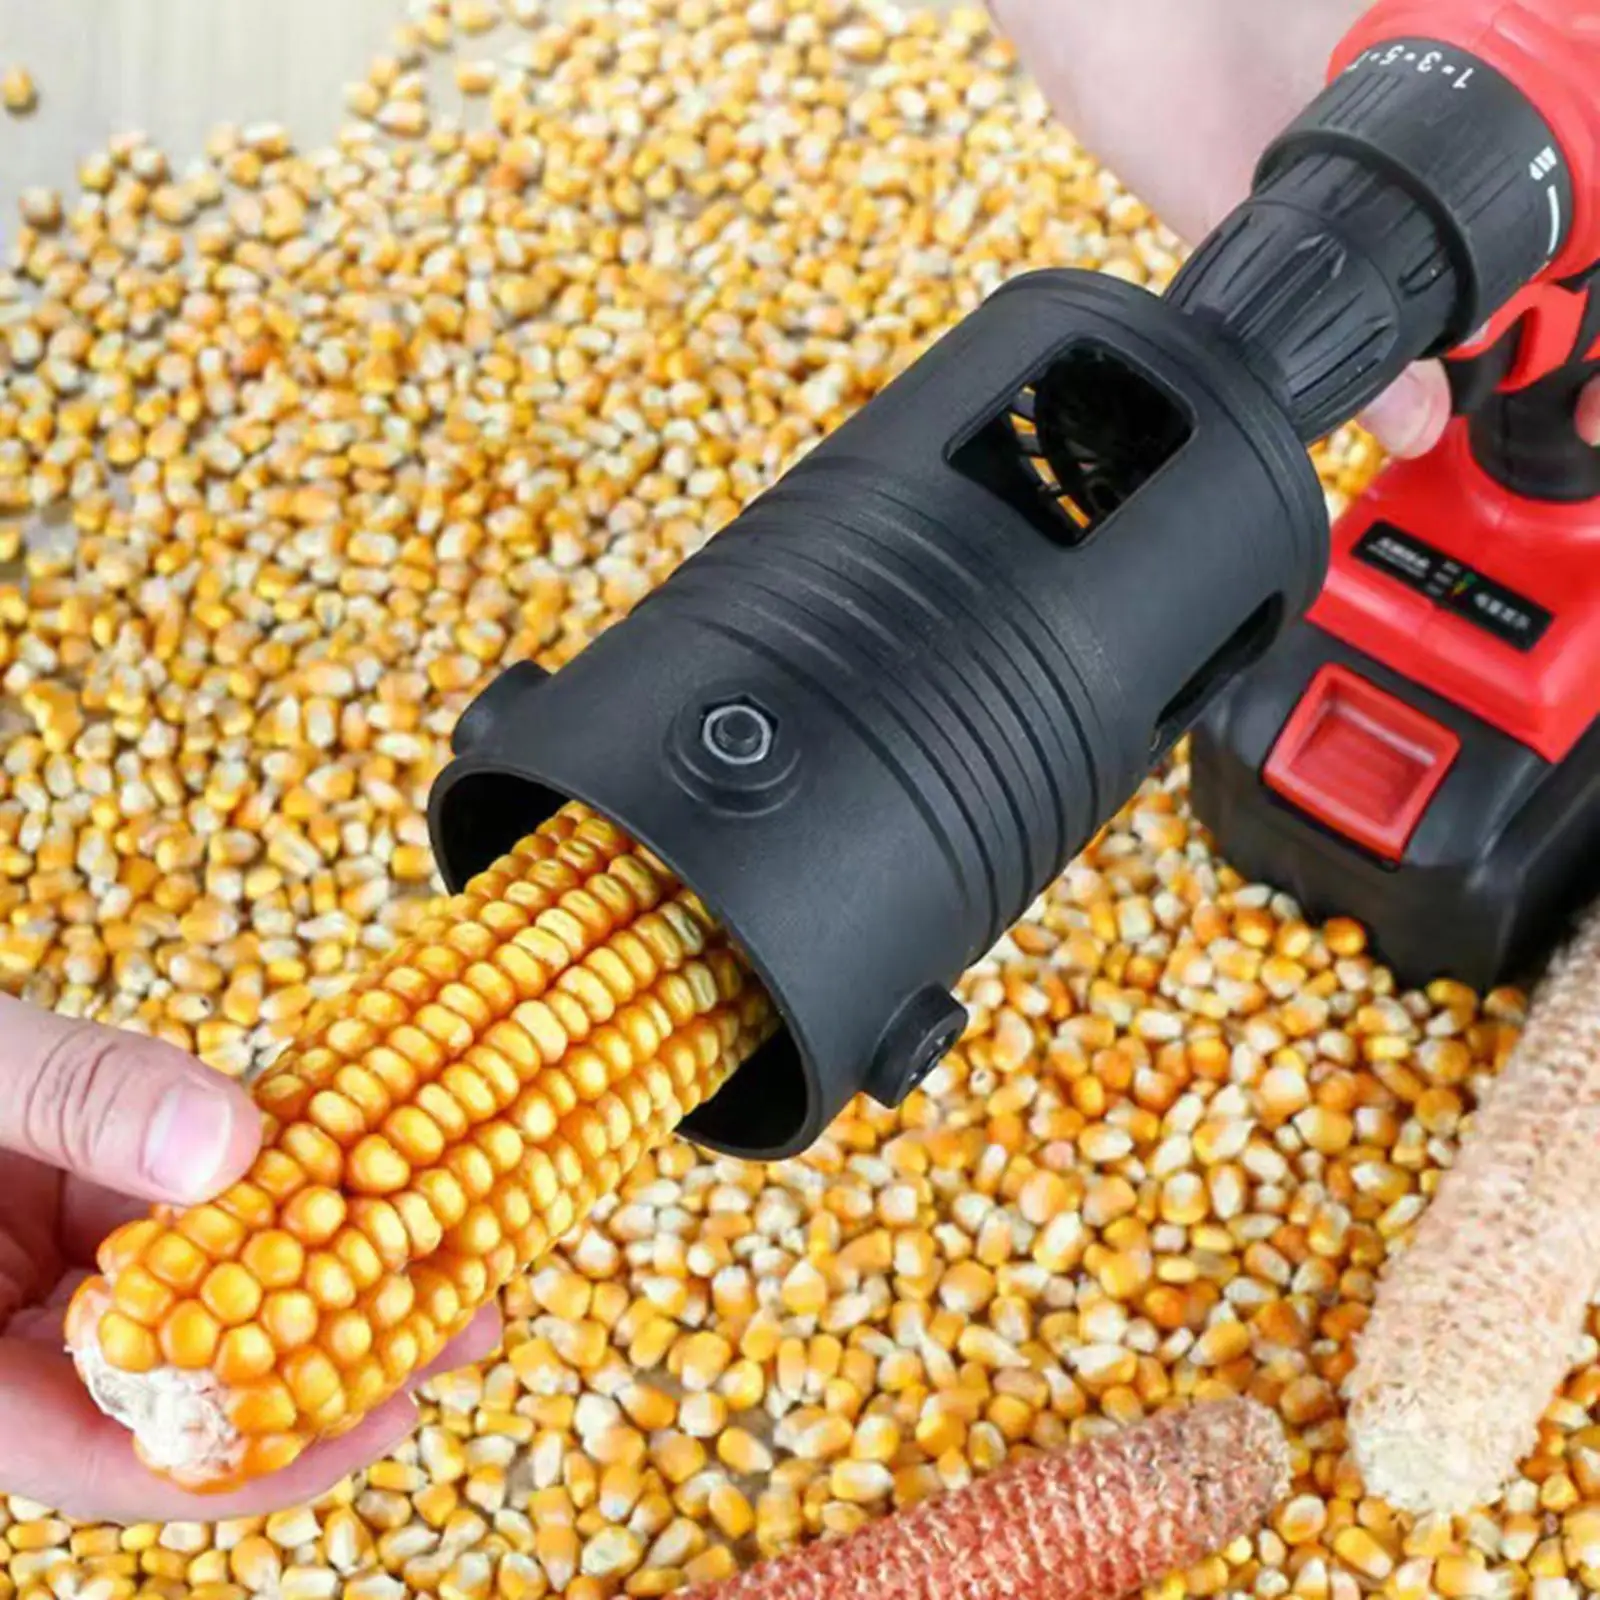 Corn Thresher Strip Tool Hand Drill Portable Multifunction Corn Sheller Machine for Farms Families Restaurant Kitchen Home